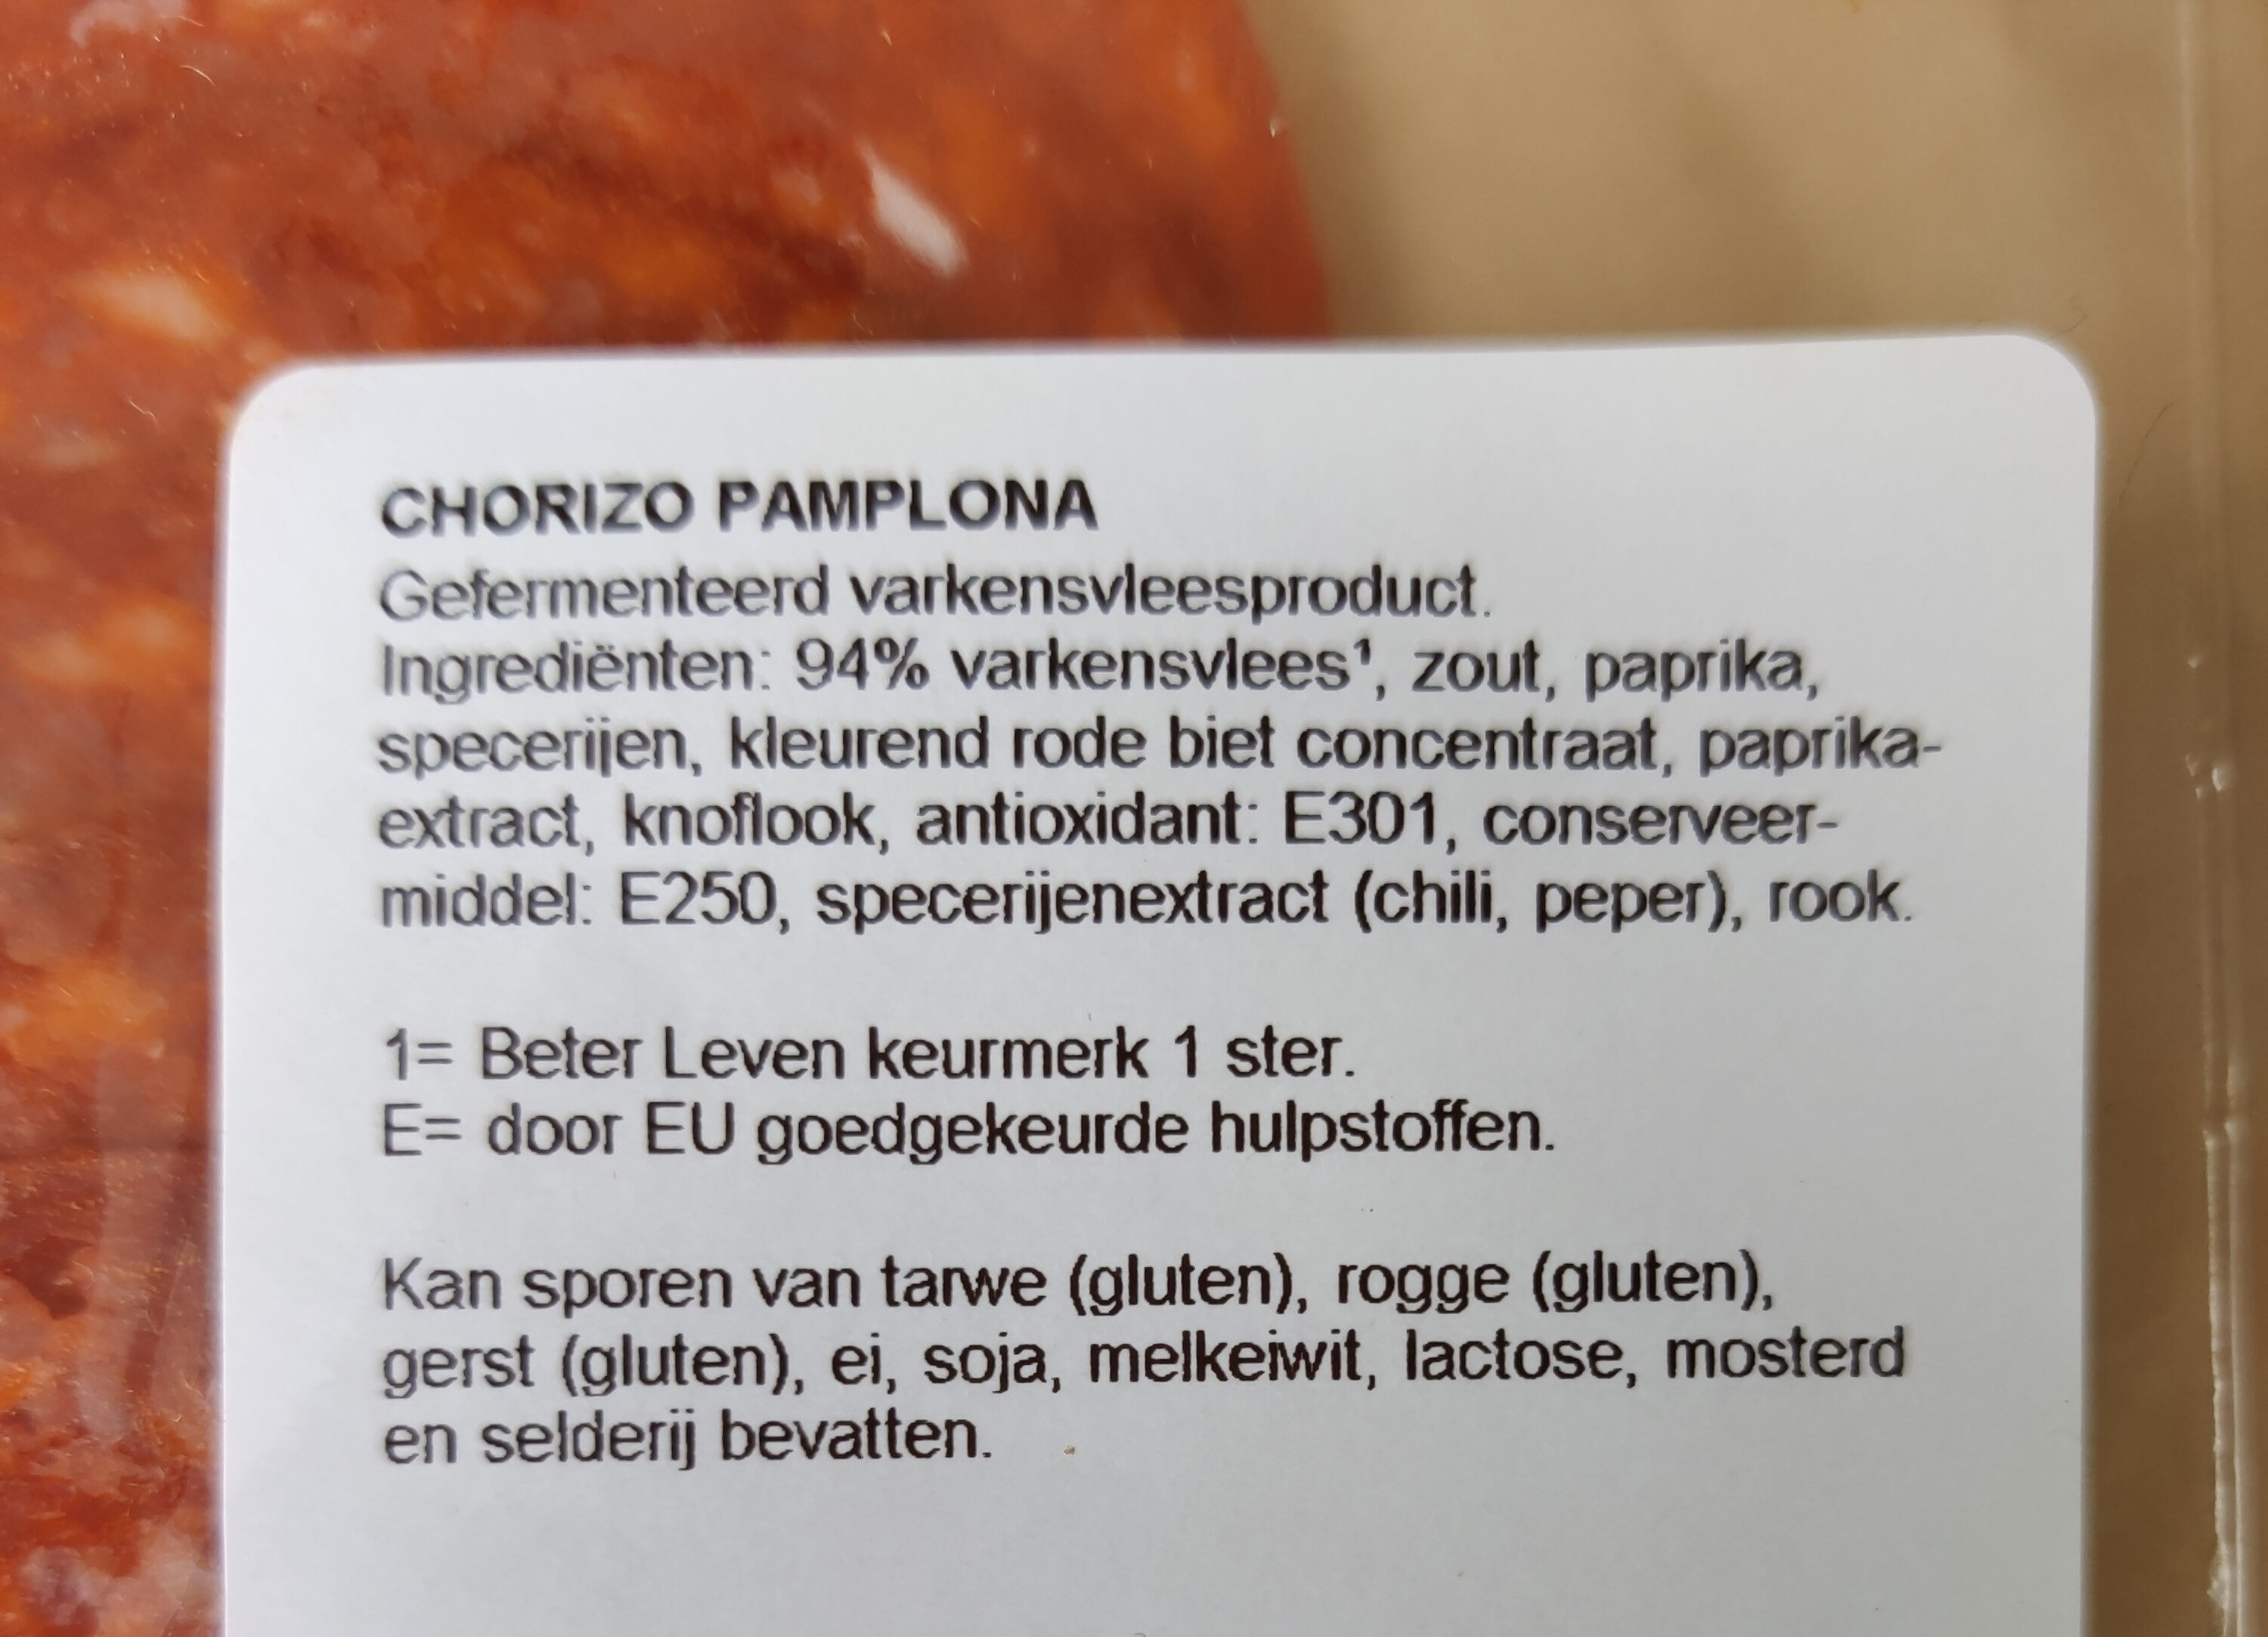 Chorizo pamplona - Ingredients - nl